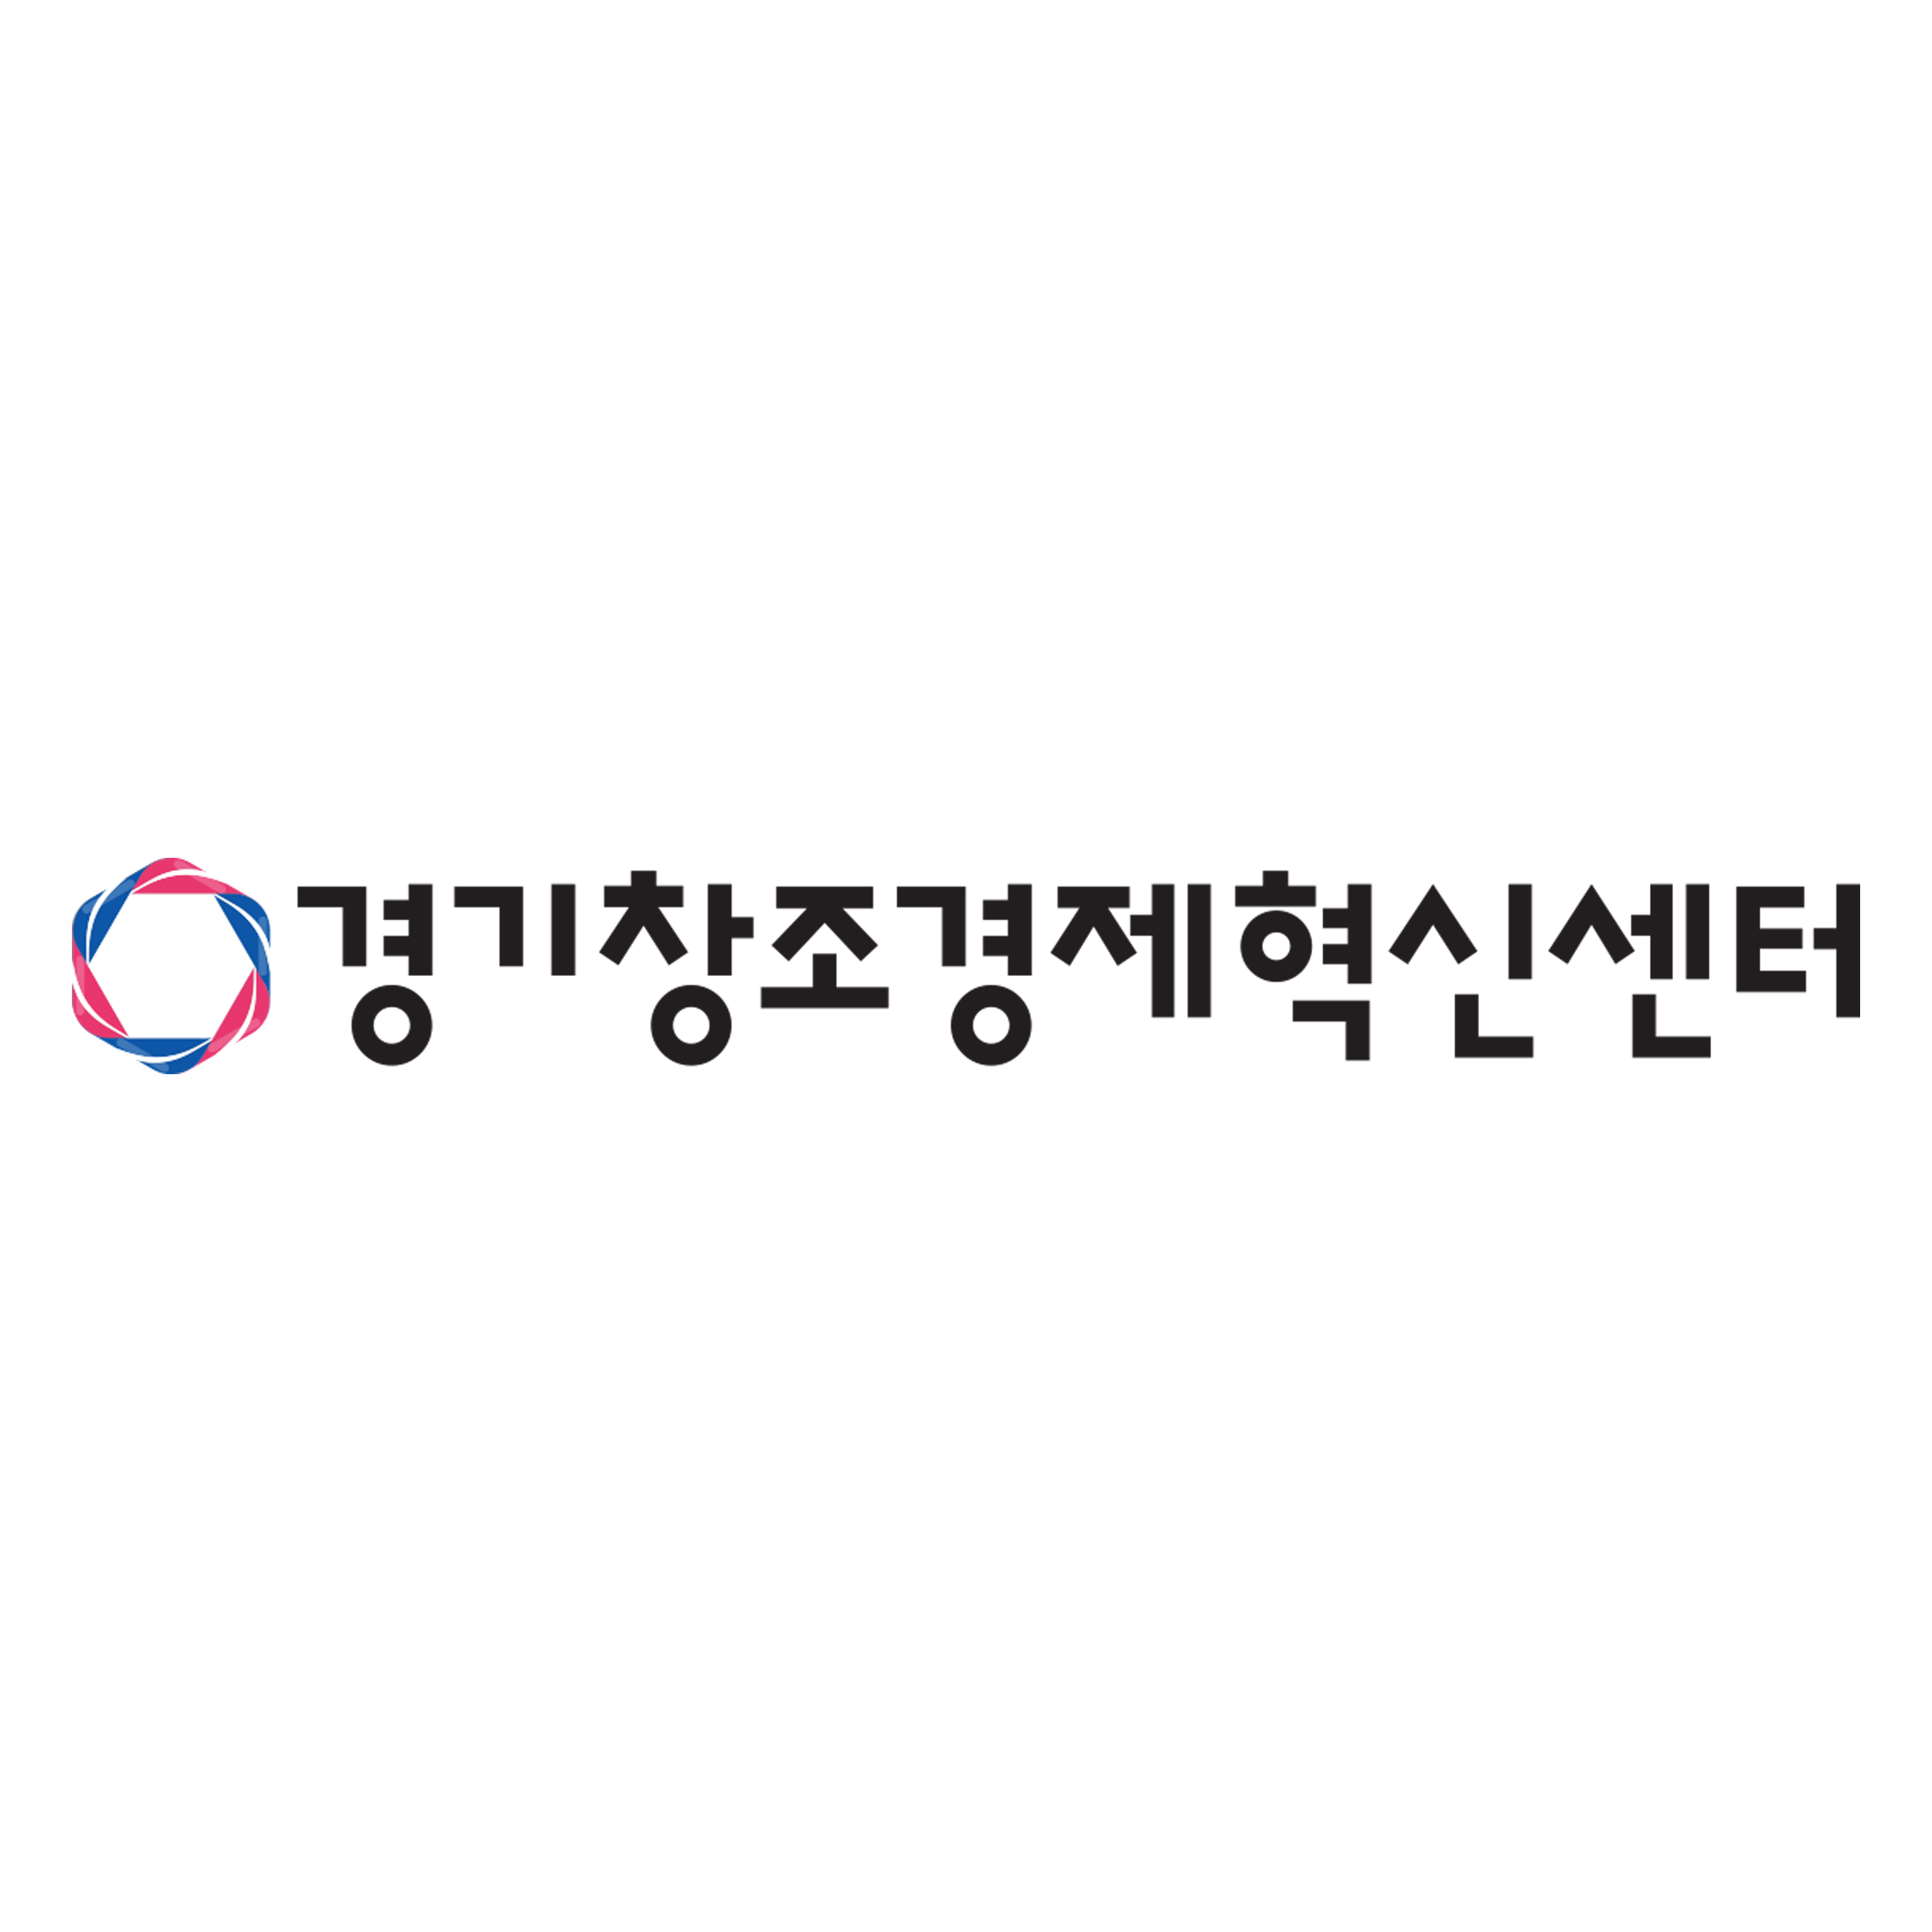 Gyeonggi Center for Creative Economy & Innovation